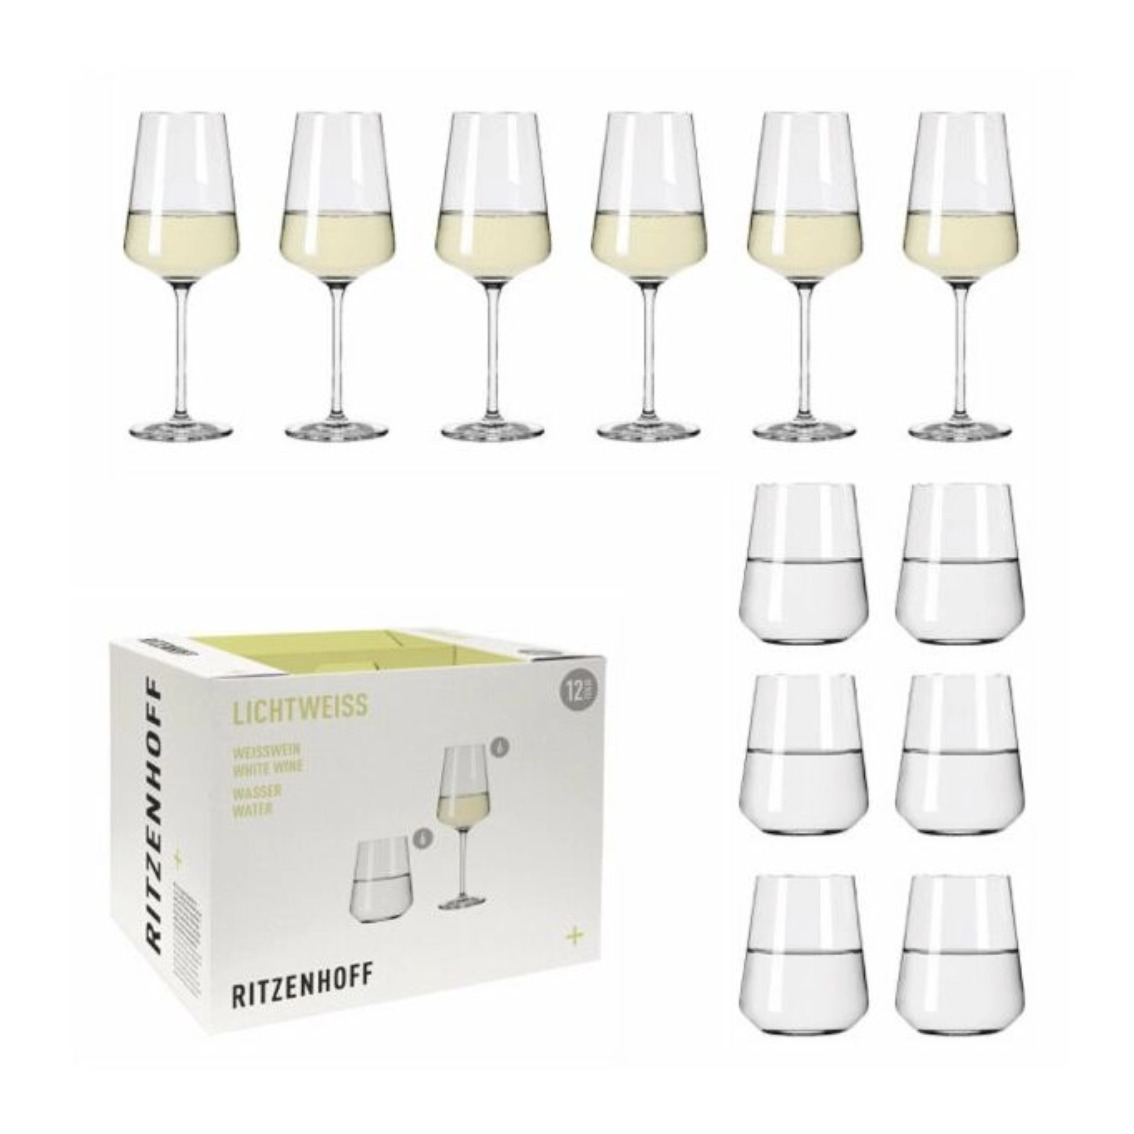 Ritzenhoff Lichtweiss Set 6 calici vino bianco + 6 bicchieri acqua -  Gasparetto 1945